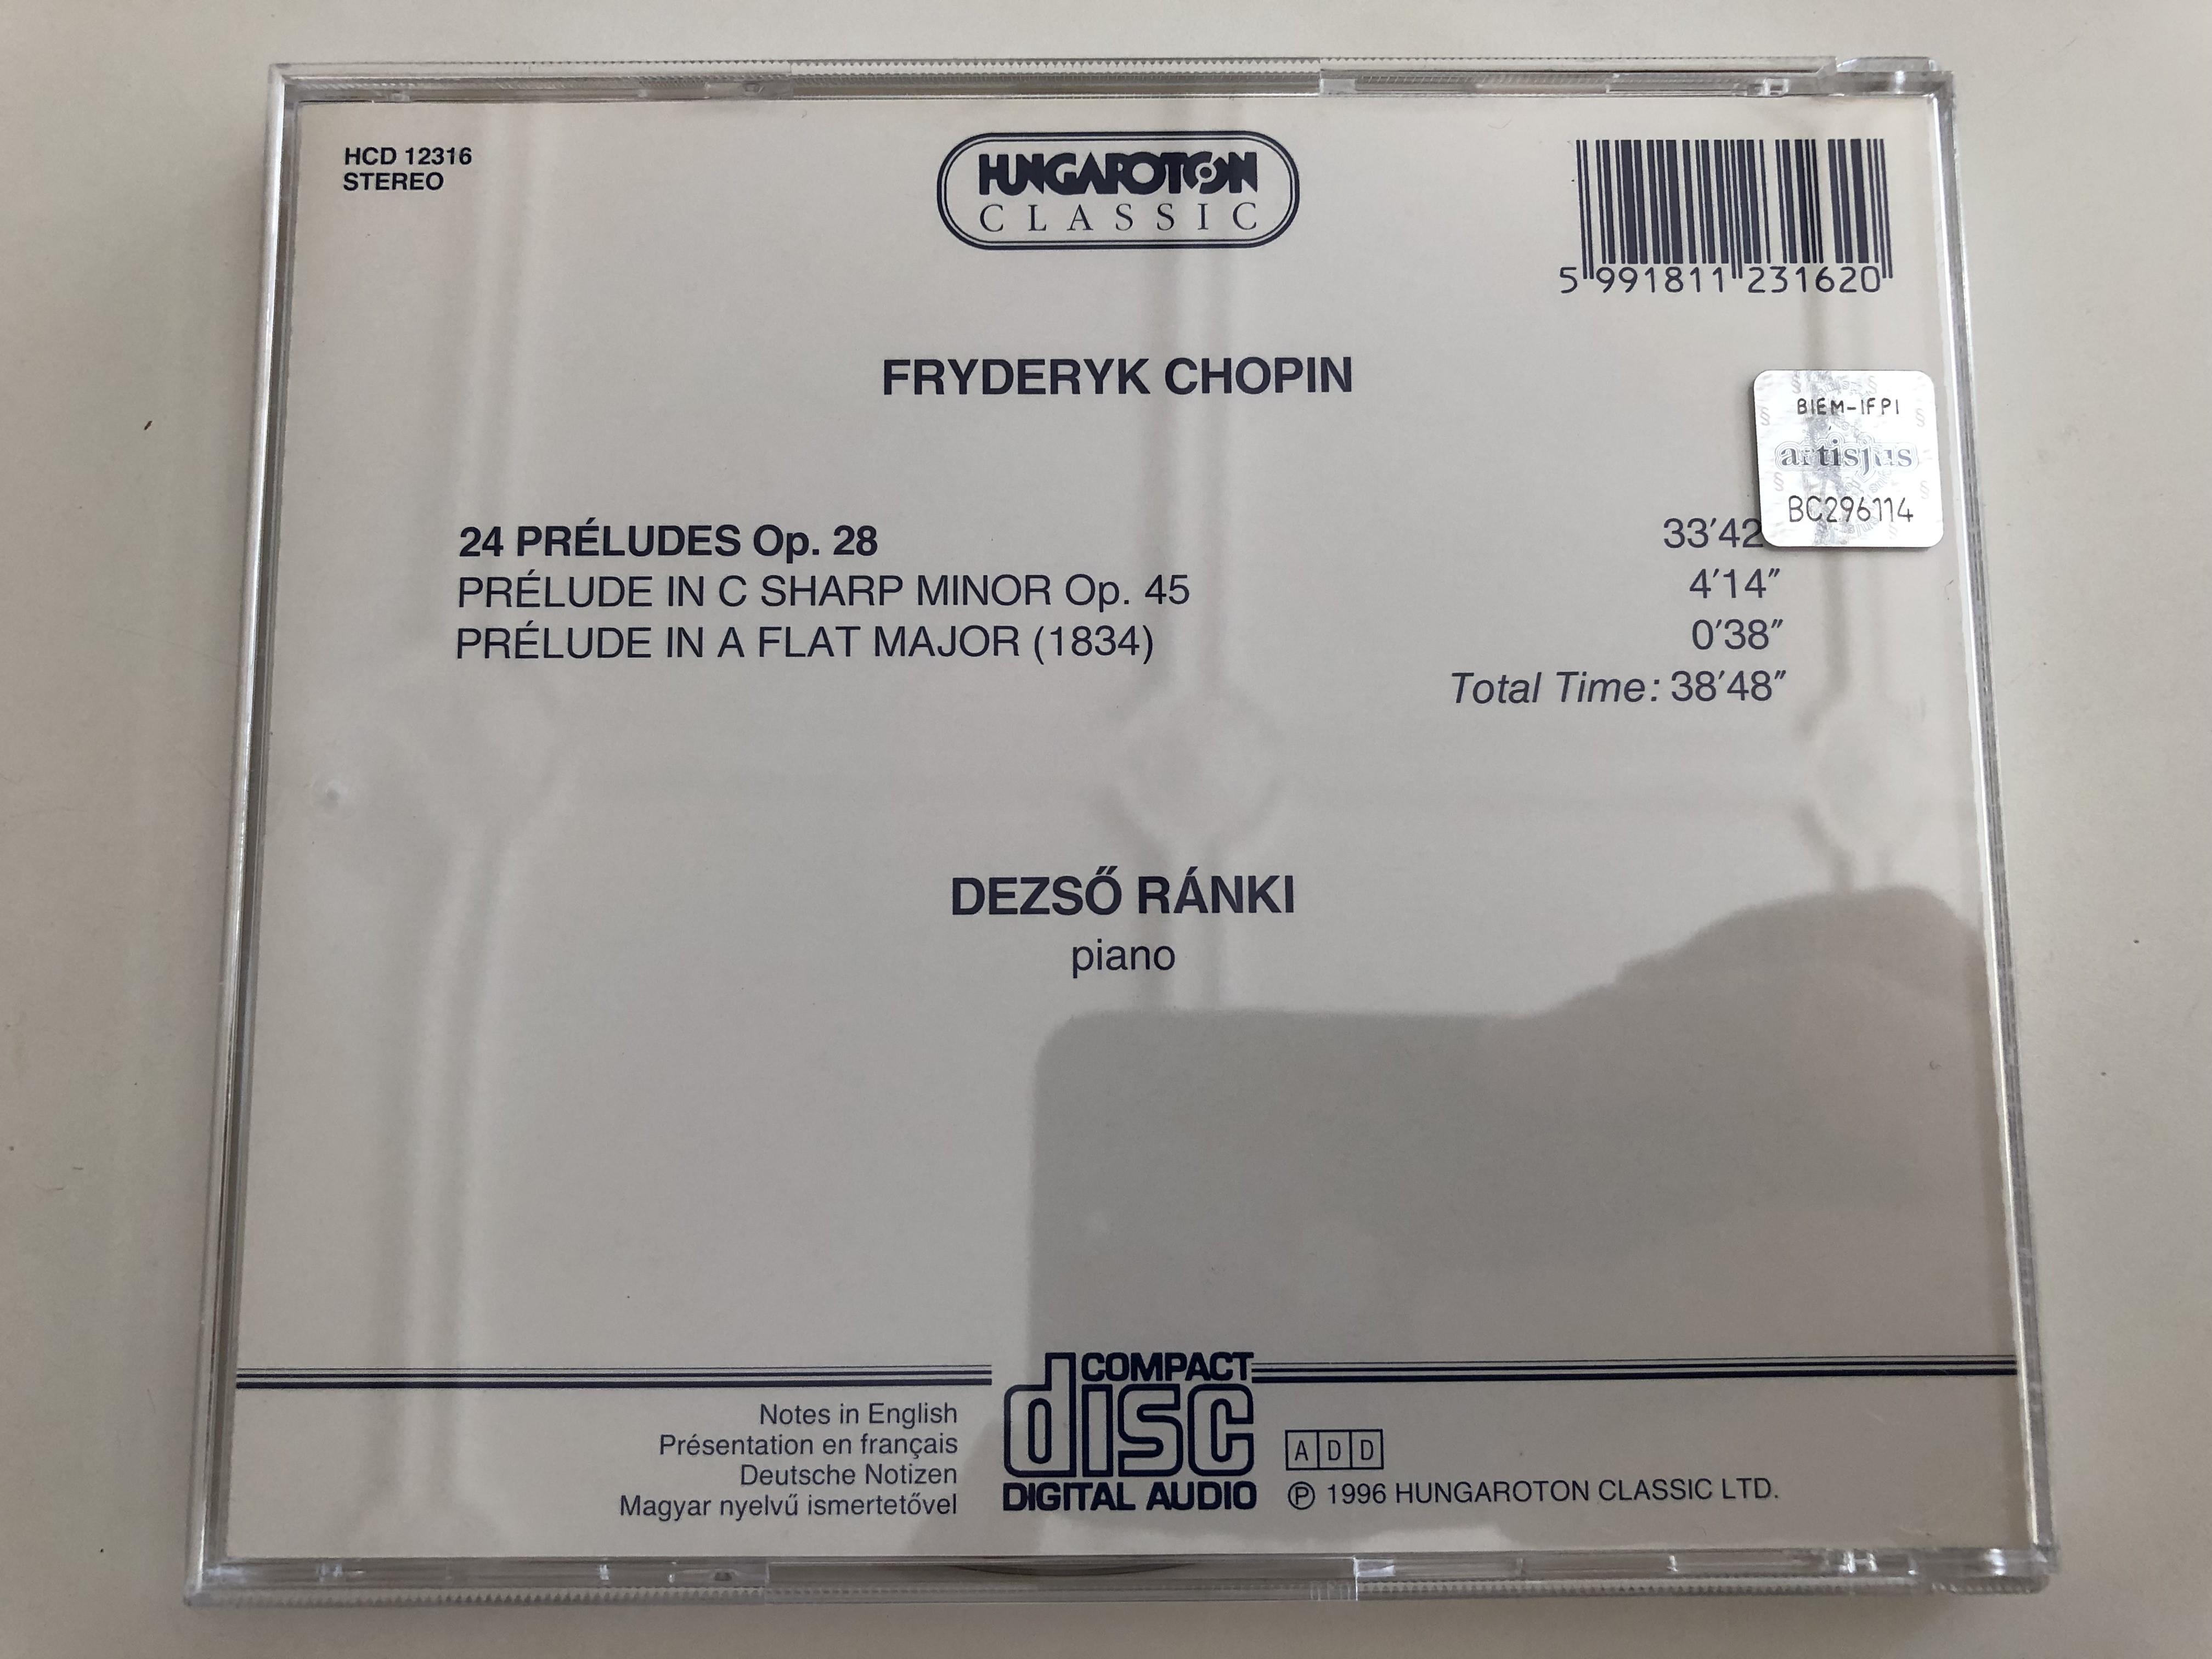 chopin-24-pr-ludes-op.-28-pr-lude-in-c-sharp-minor-op.-45-pr-lude-in-a-flat-major-1840-dezs-r-nki-piano-hungaroton-classic-audio-cd-1996-hcd-12316.jpg